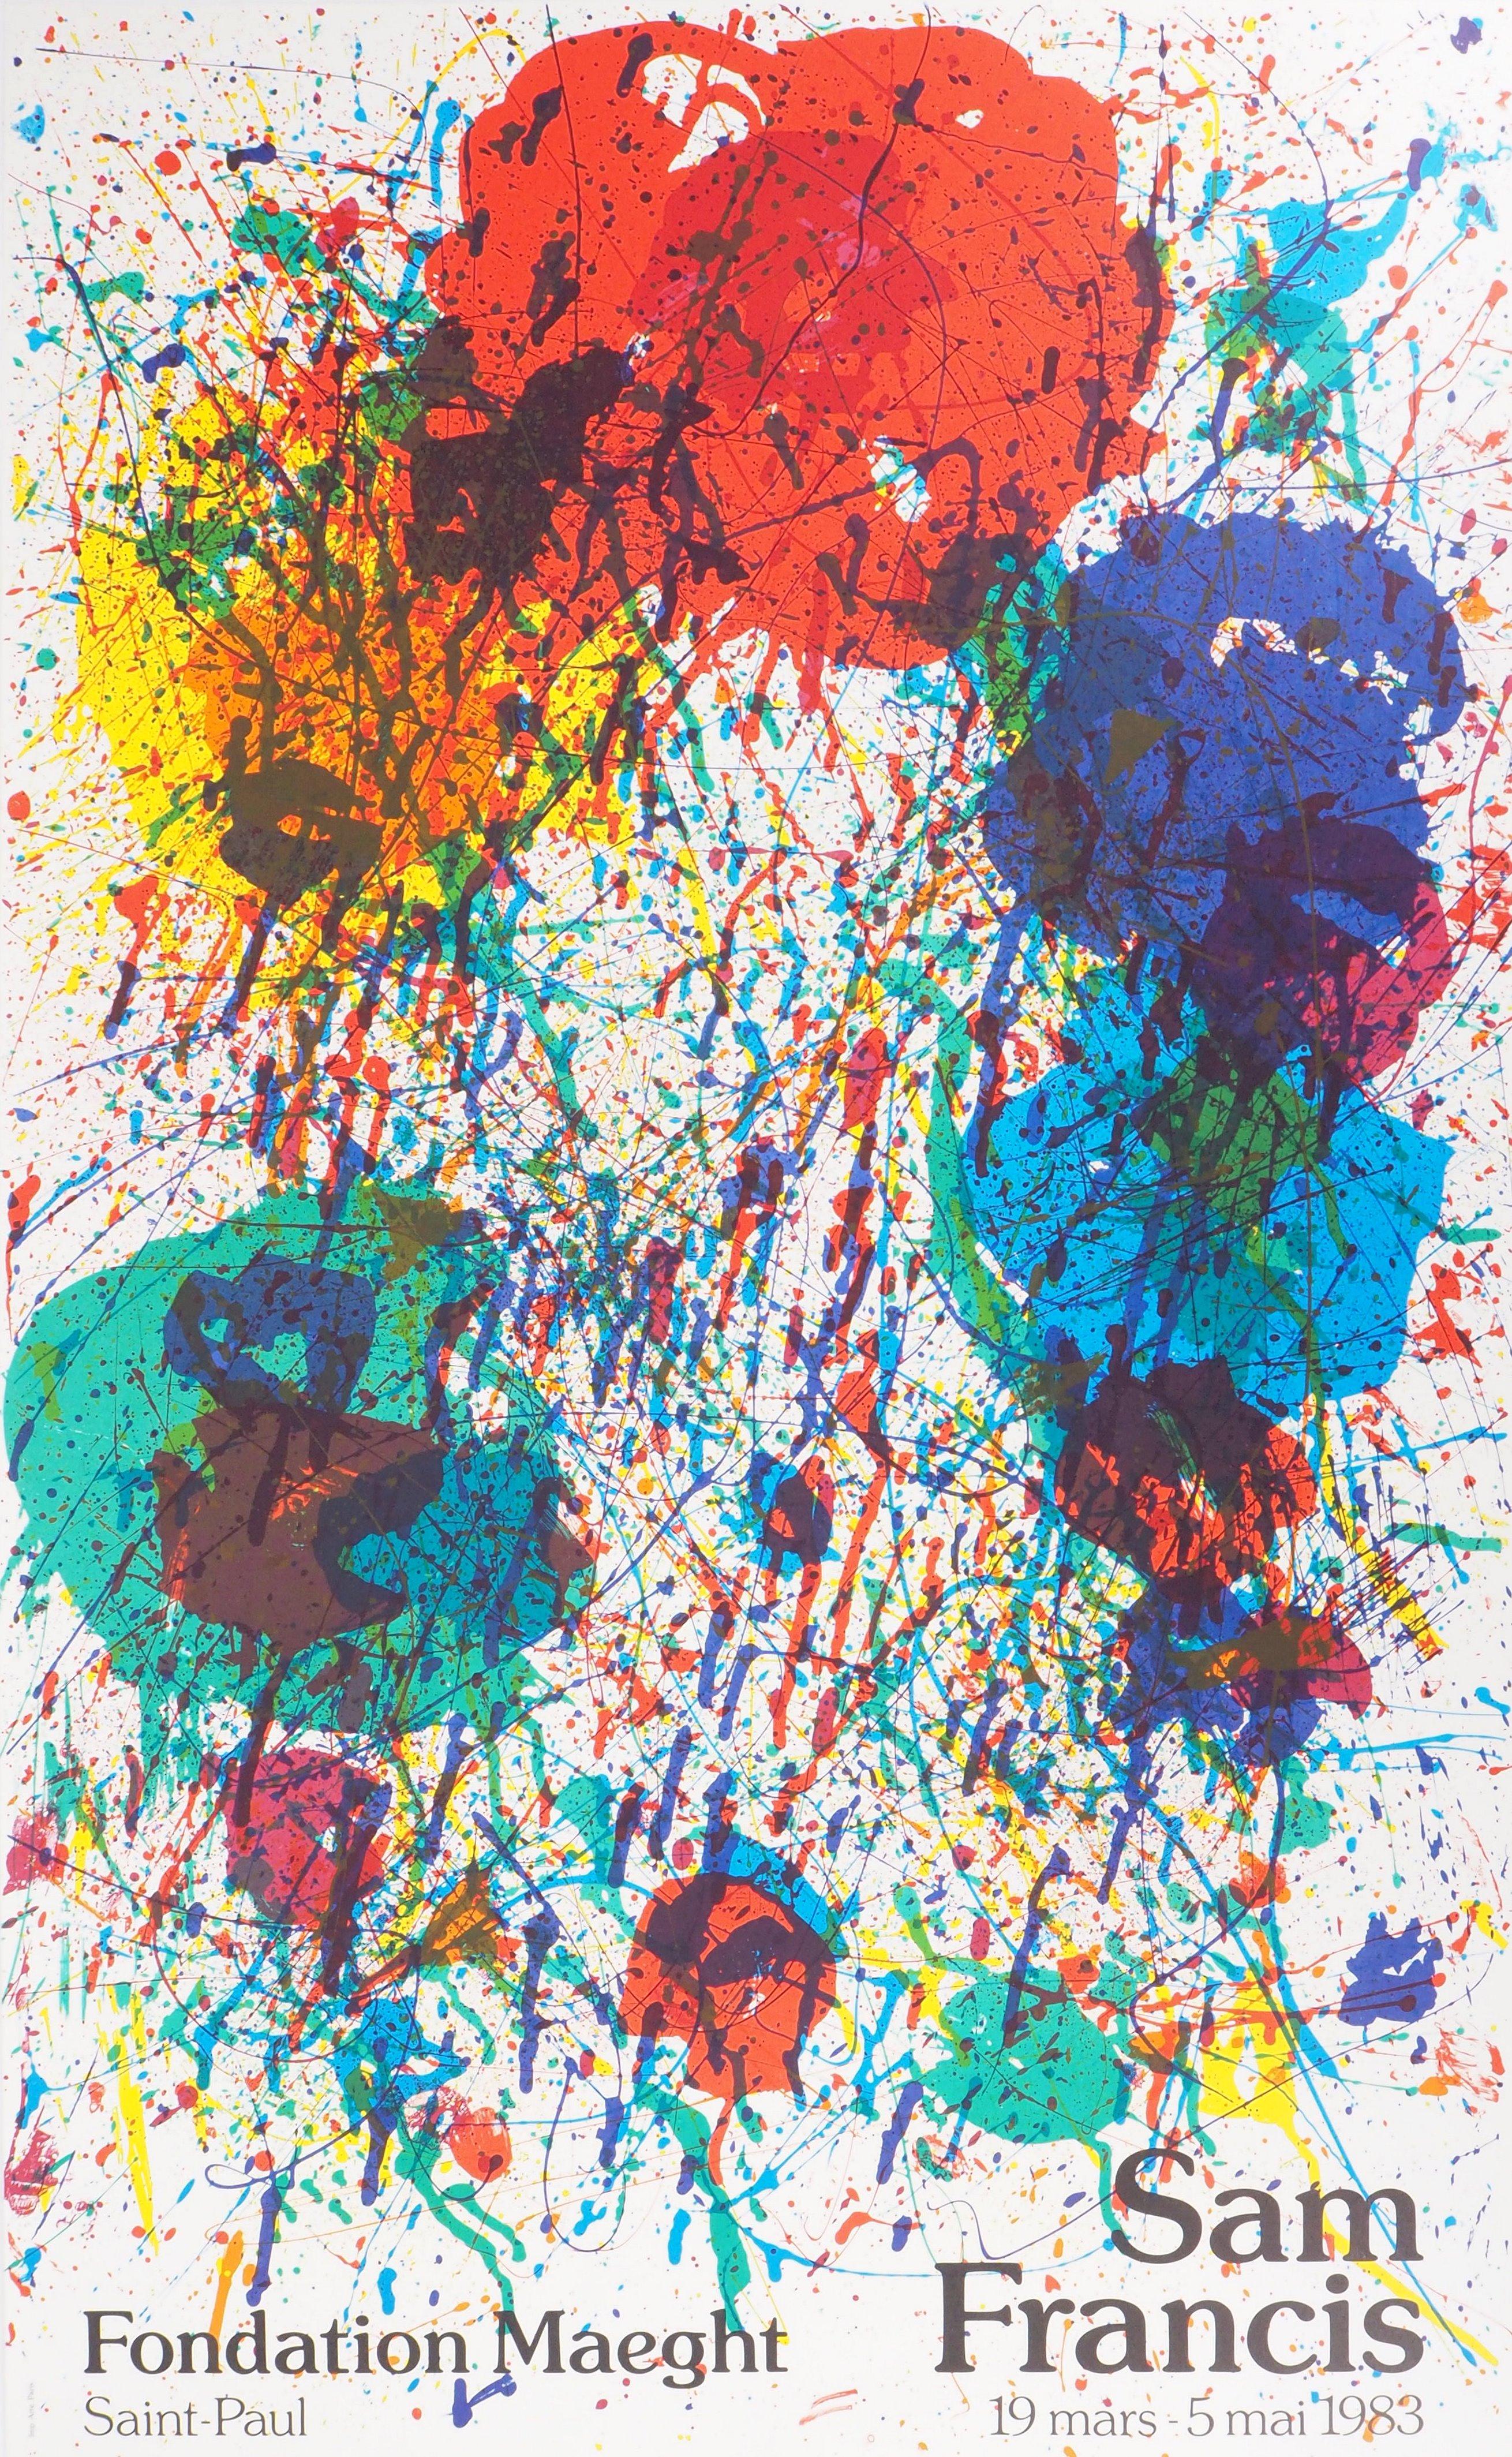 Abstract Print Sam Francis - Explosion des couleurs - Lithographie originale ( Maeght 1983)